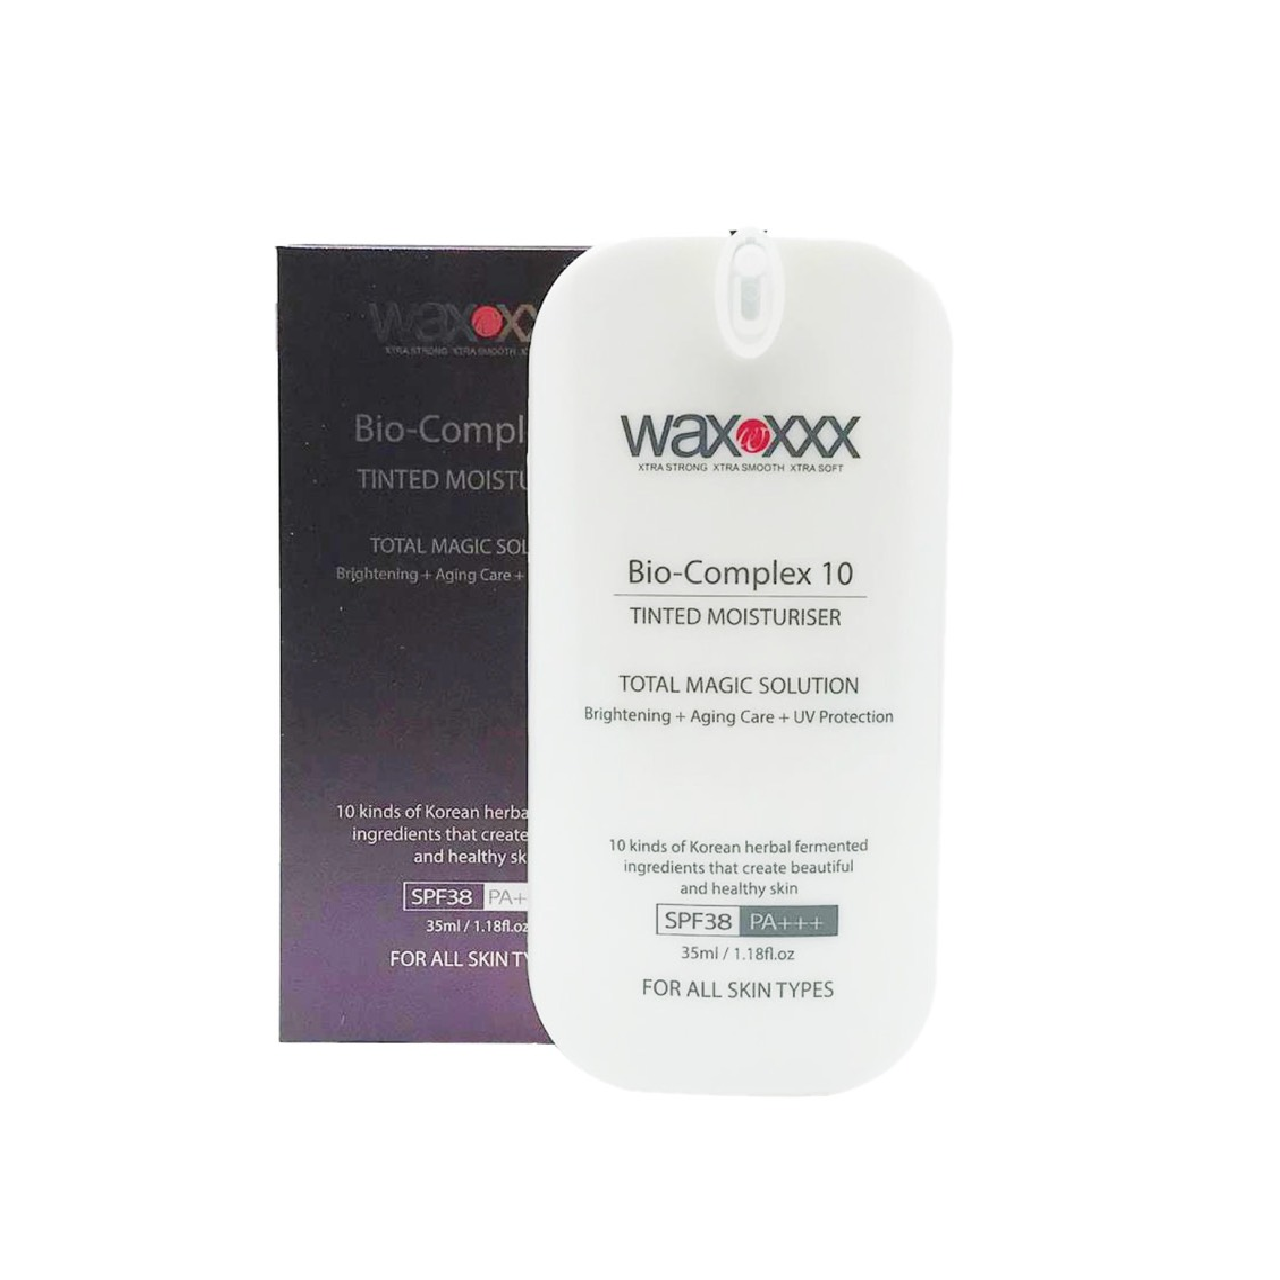 WAXXXX oCIRvbNX10(BBN[)